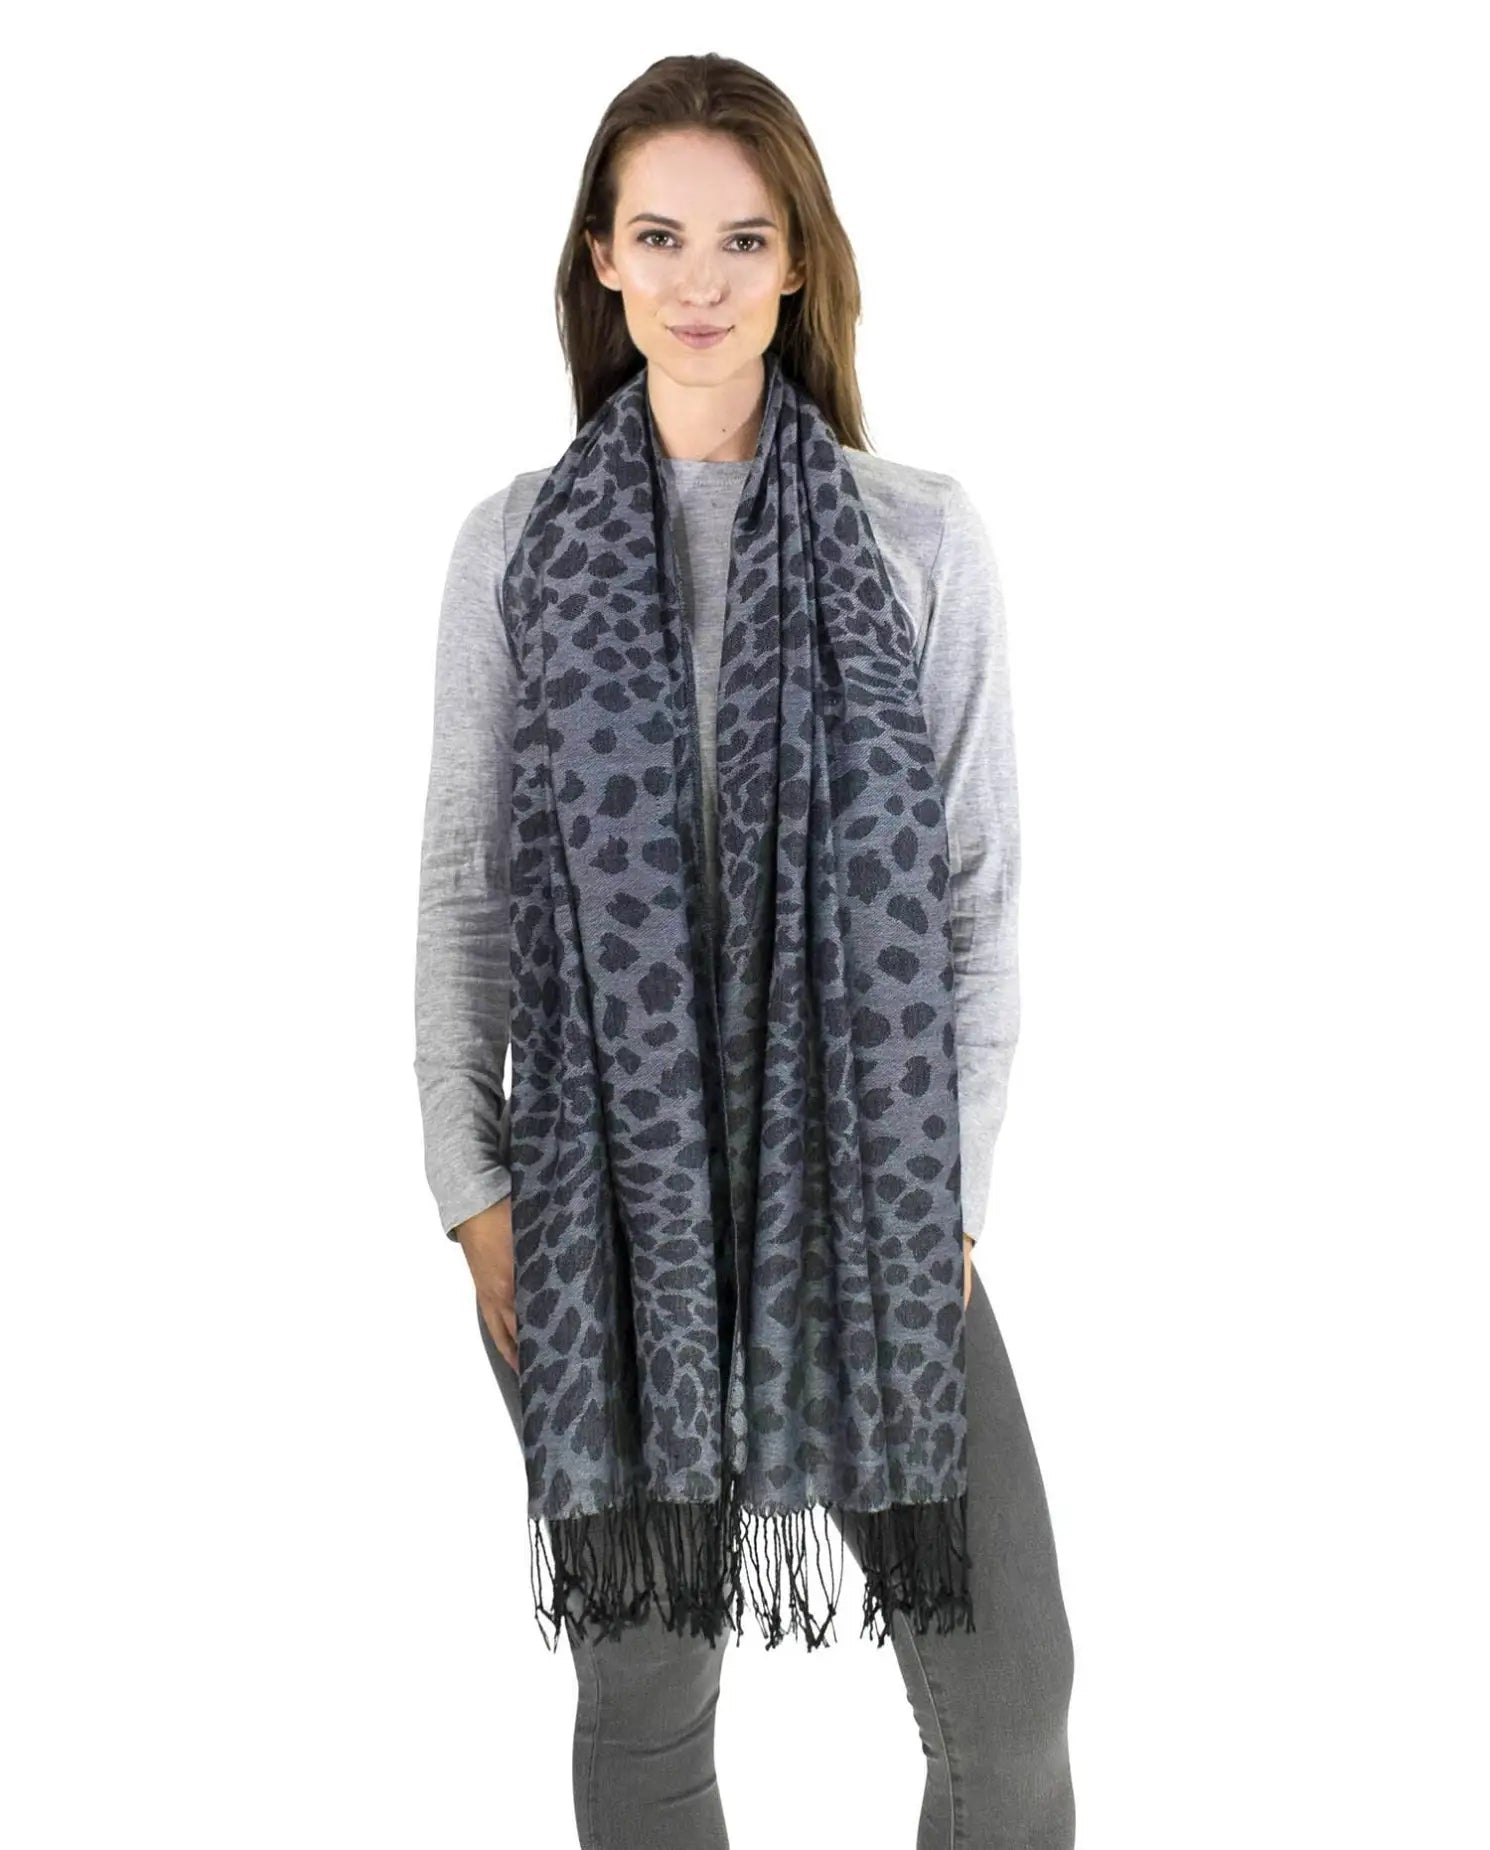 Grey leopard print pashmina scarf with tassels